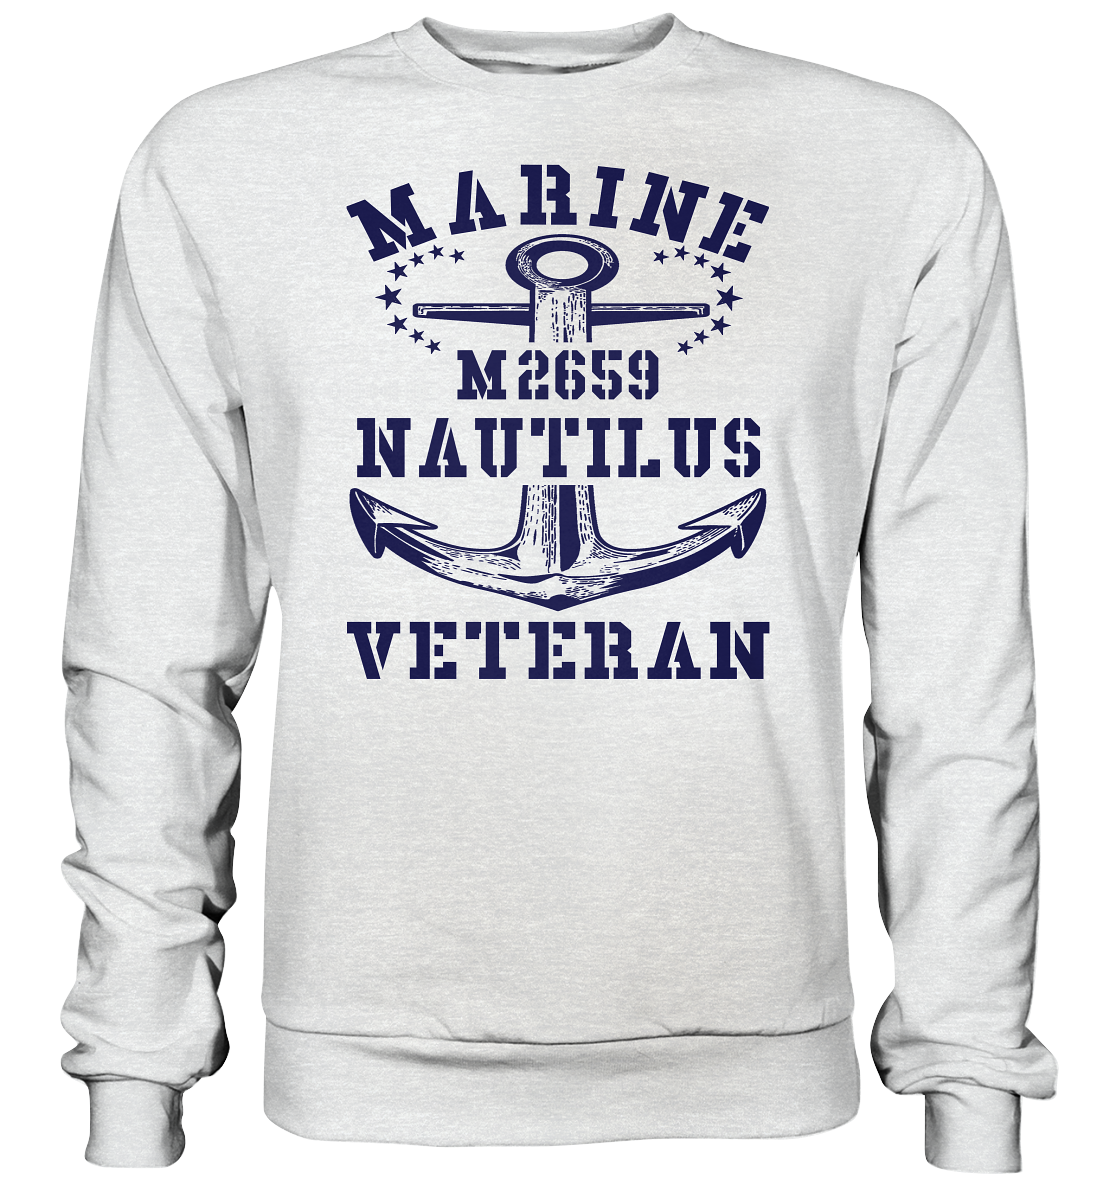 BiMi M2659 NAUTILUS Marine Veteran - Premium Sweatshirt